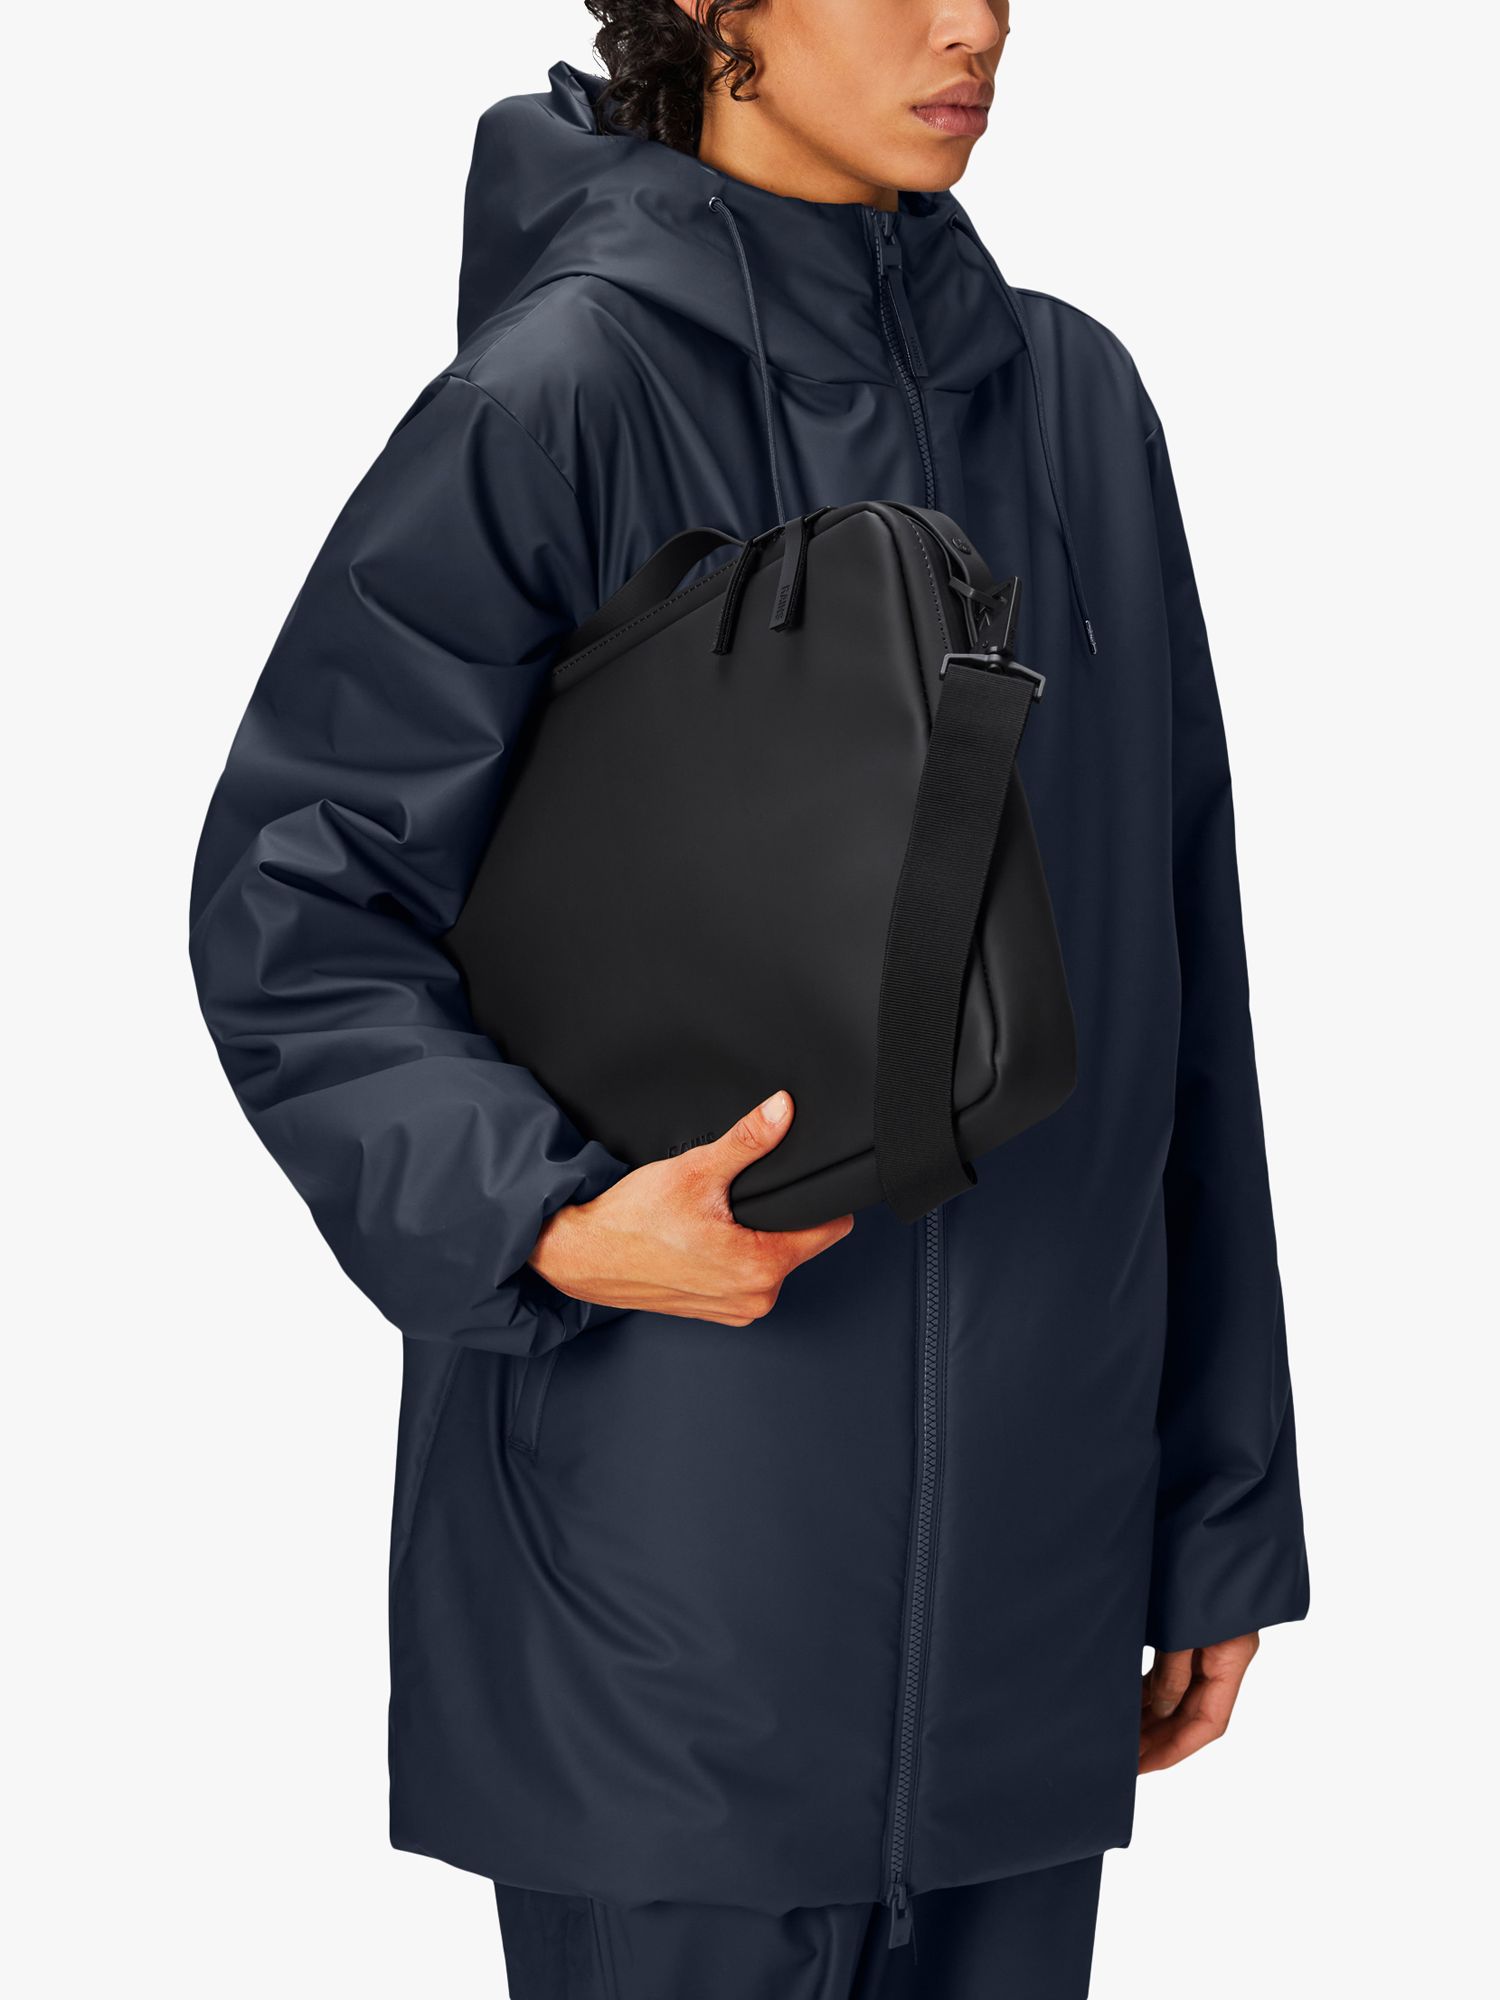 Rains 15" Laptop Bag, Black